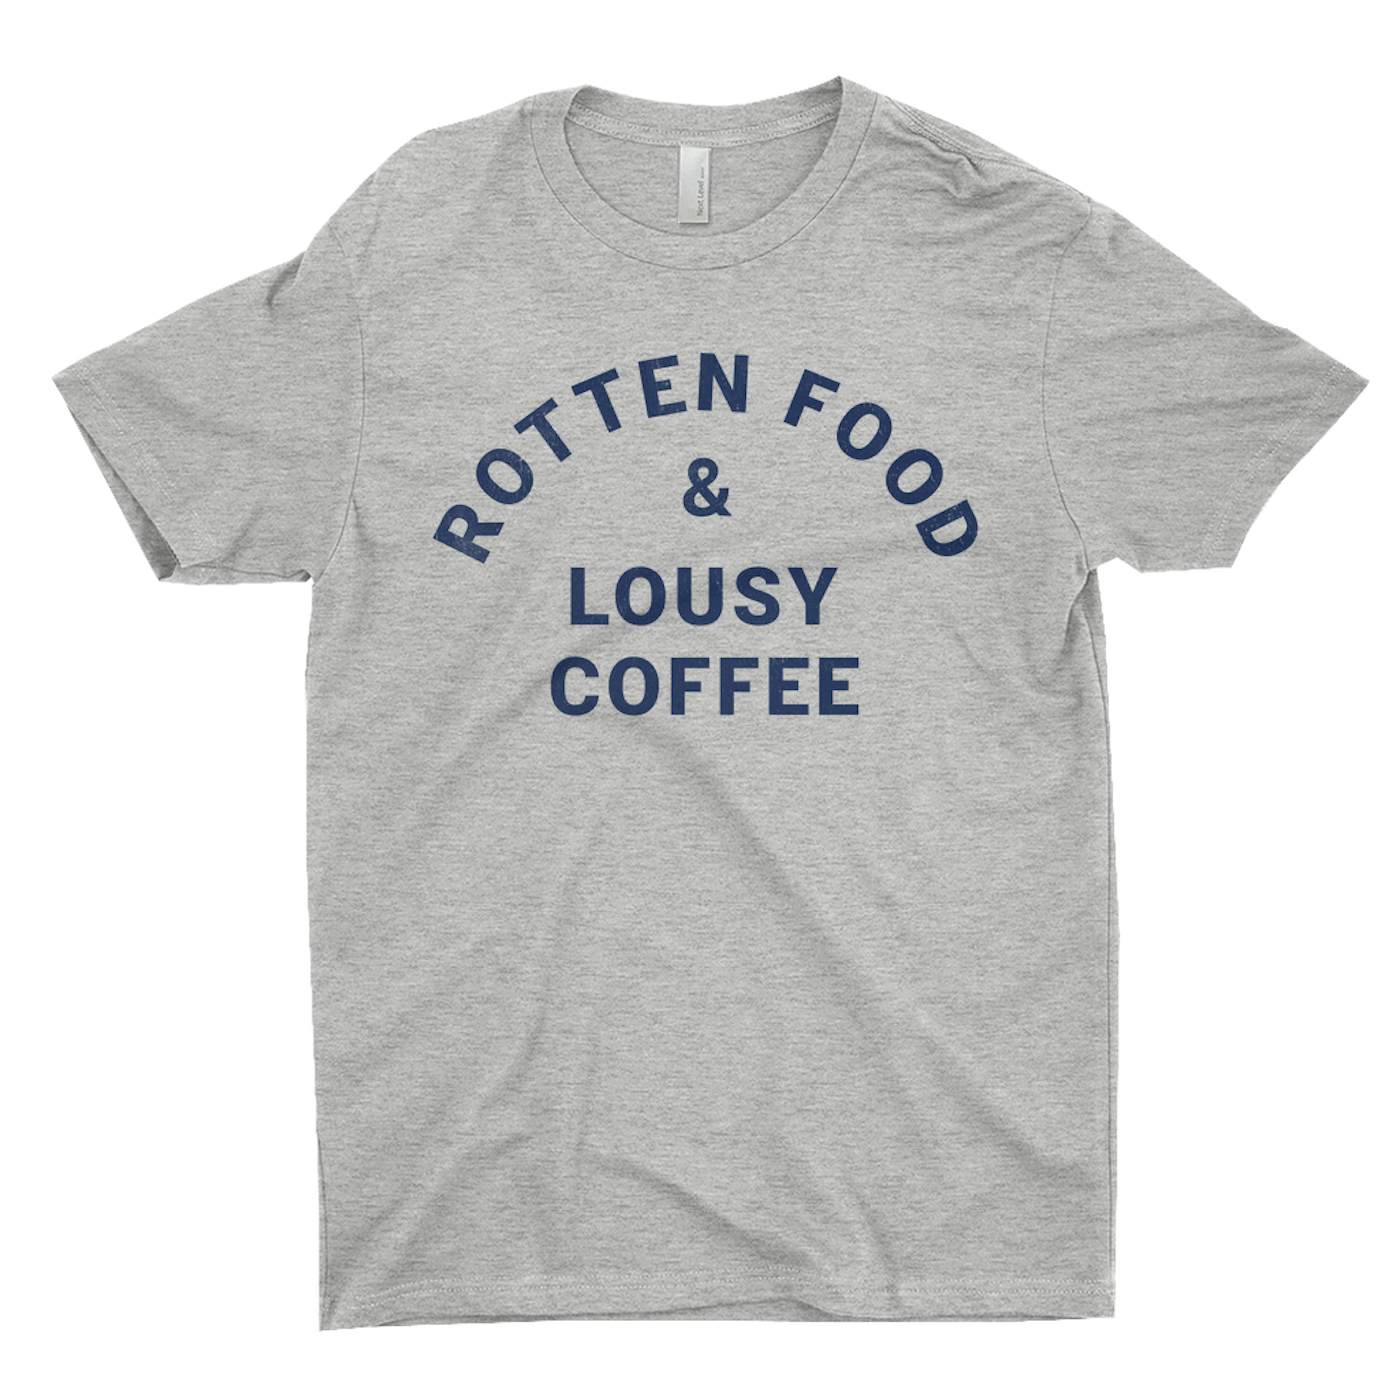 Joe Cocker T-Shirt | Rotten Food & Lousy Coffee Tee worn by Joe Cocker Shirt